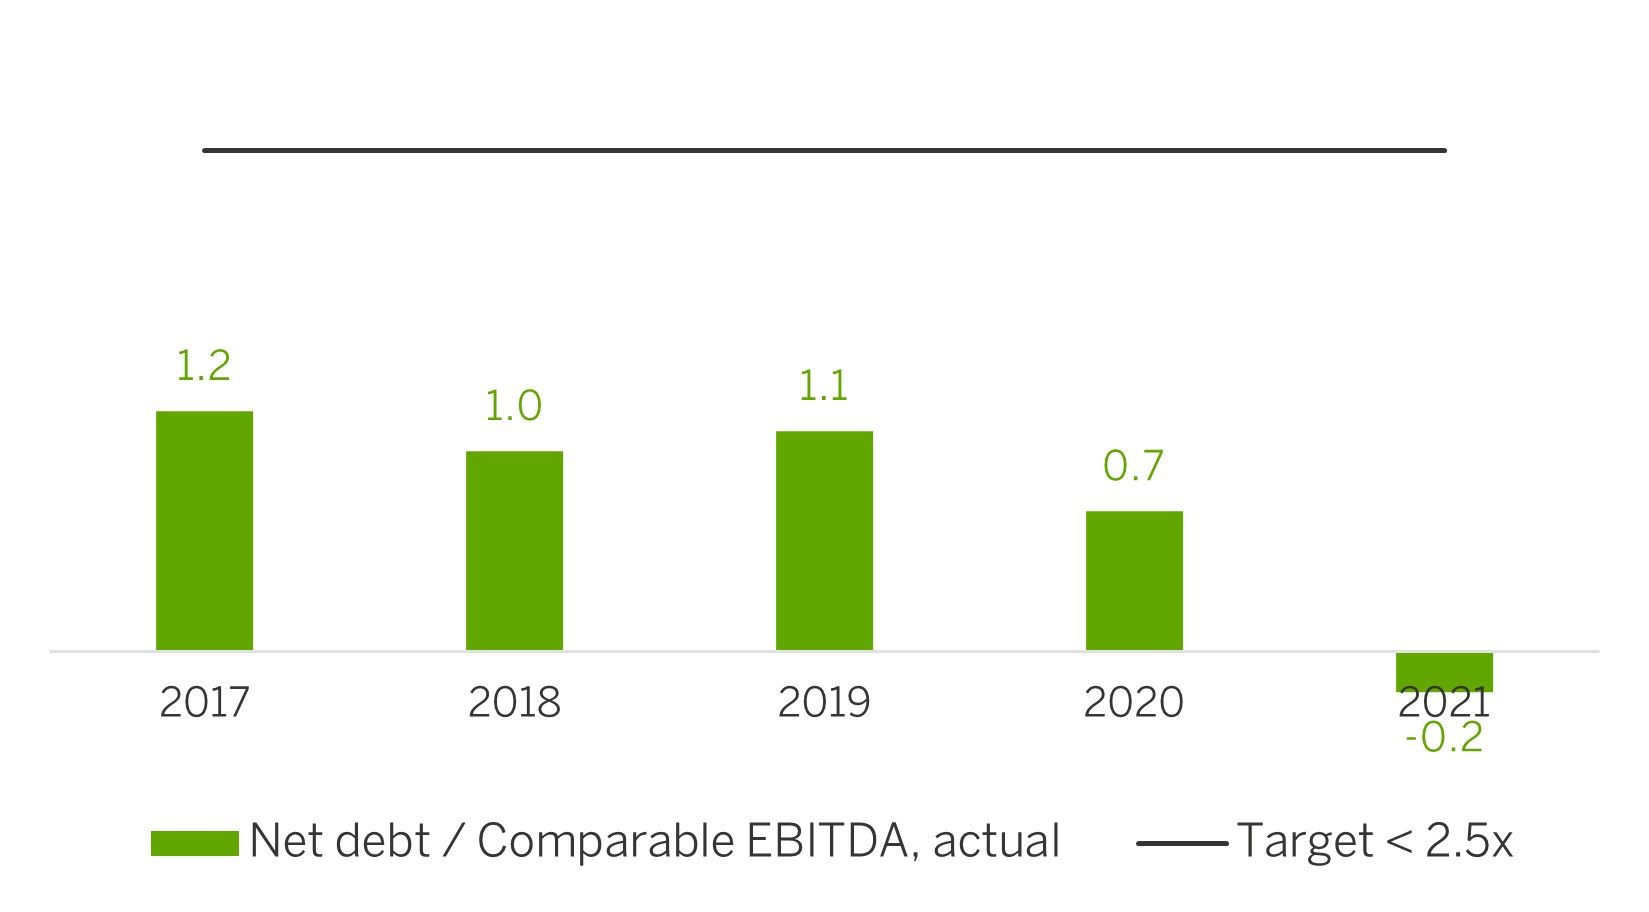 Metsä Board's Net debt per Comparable EBITDA